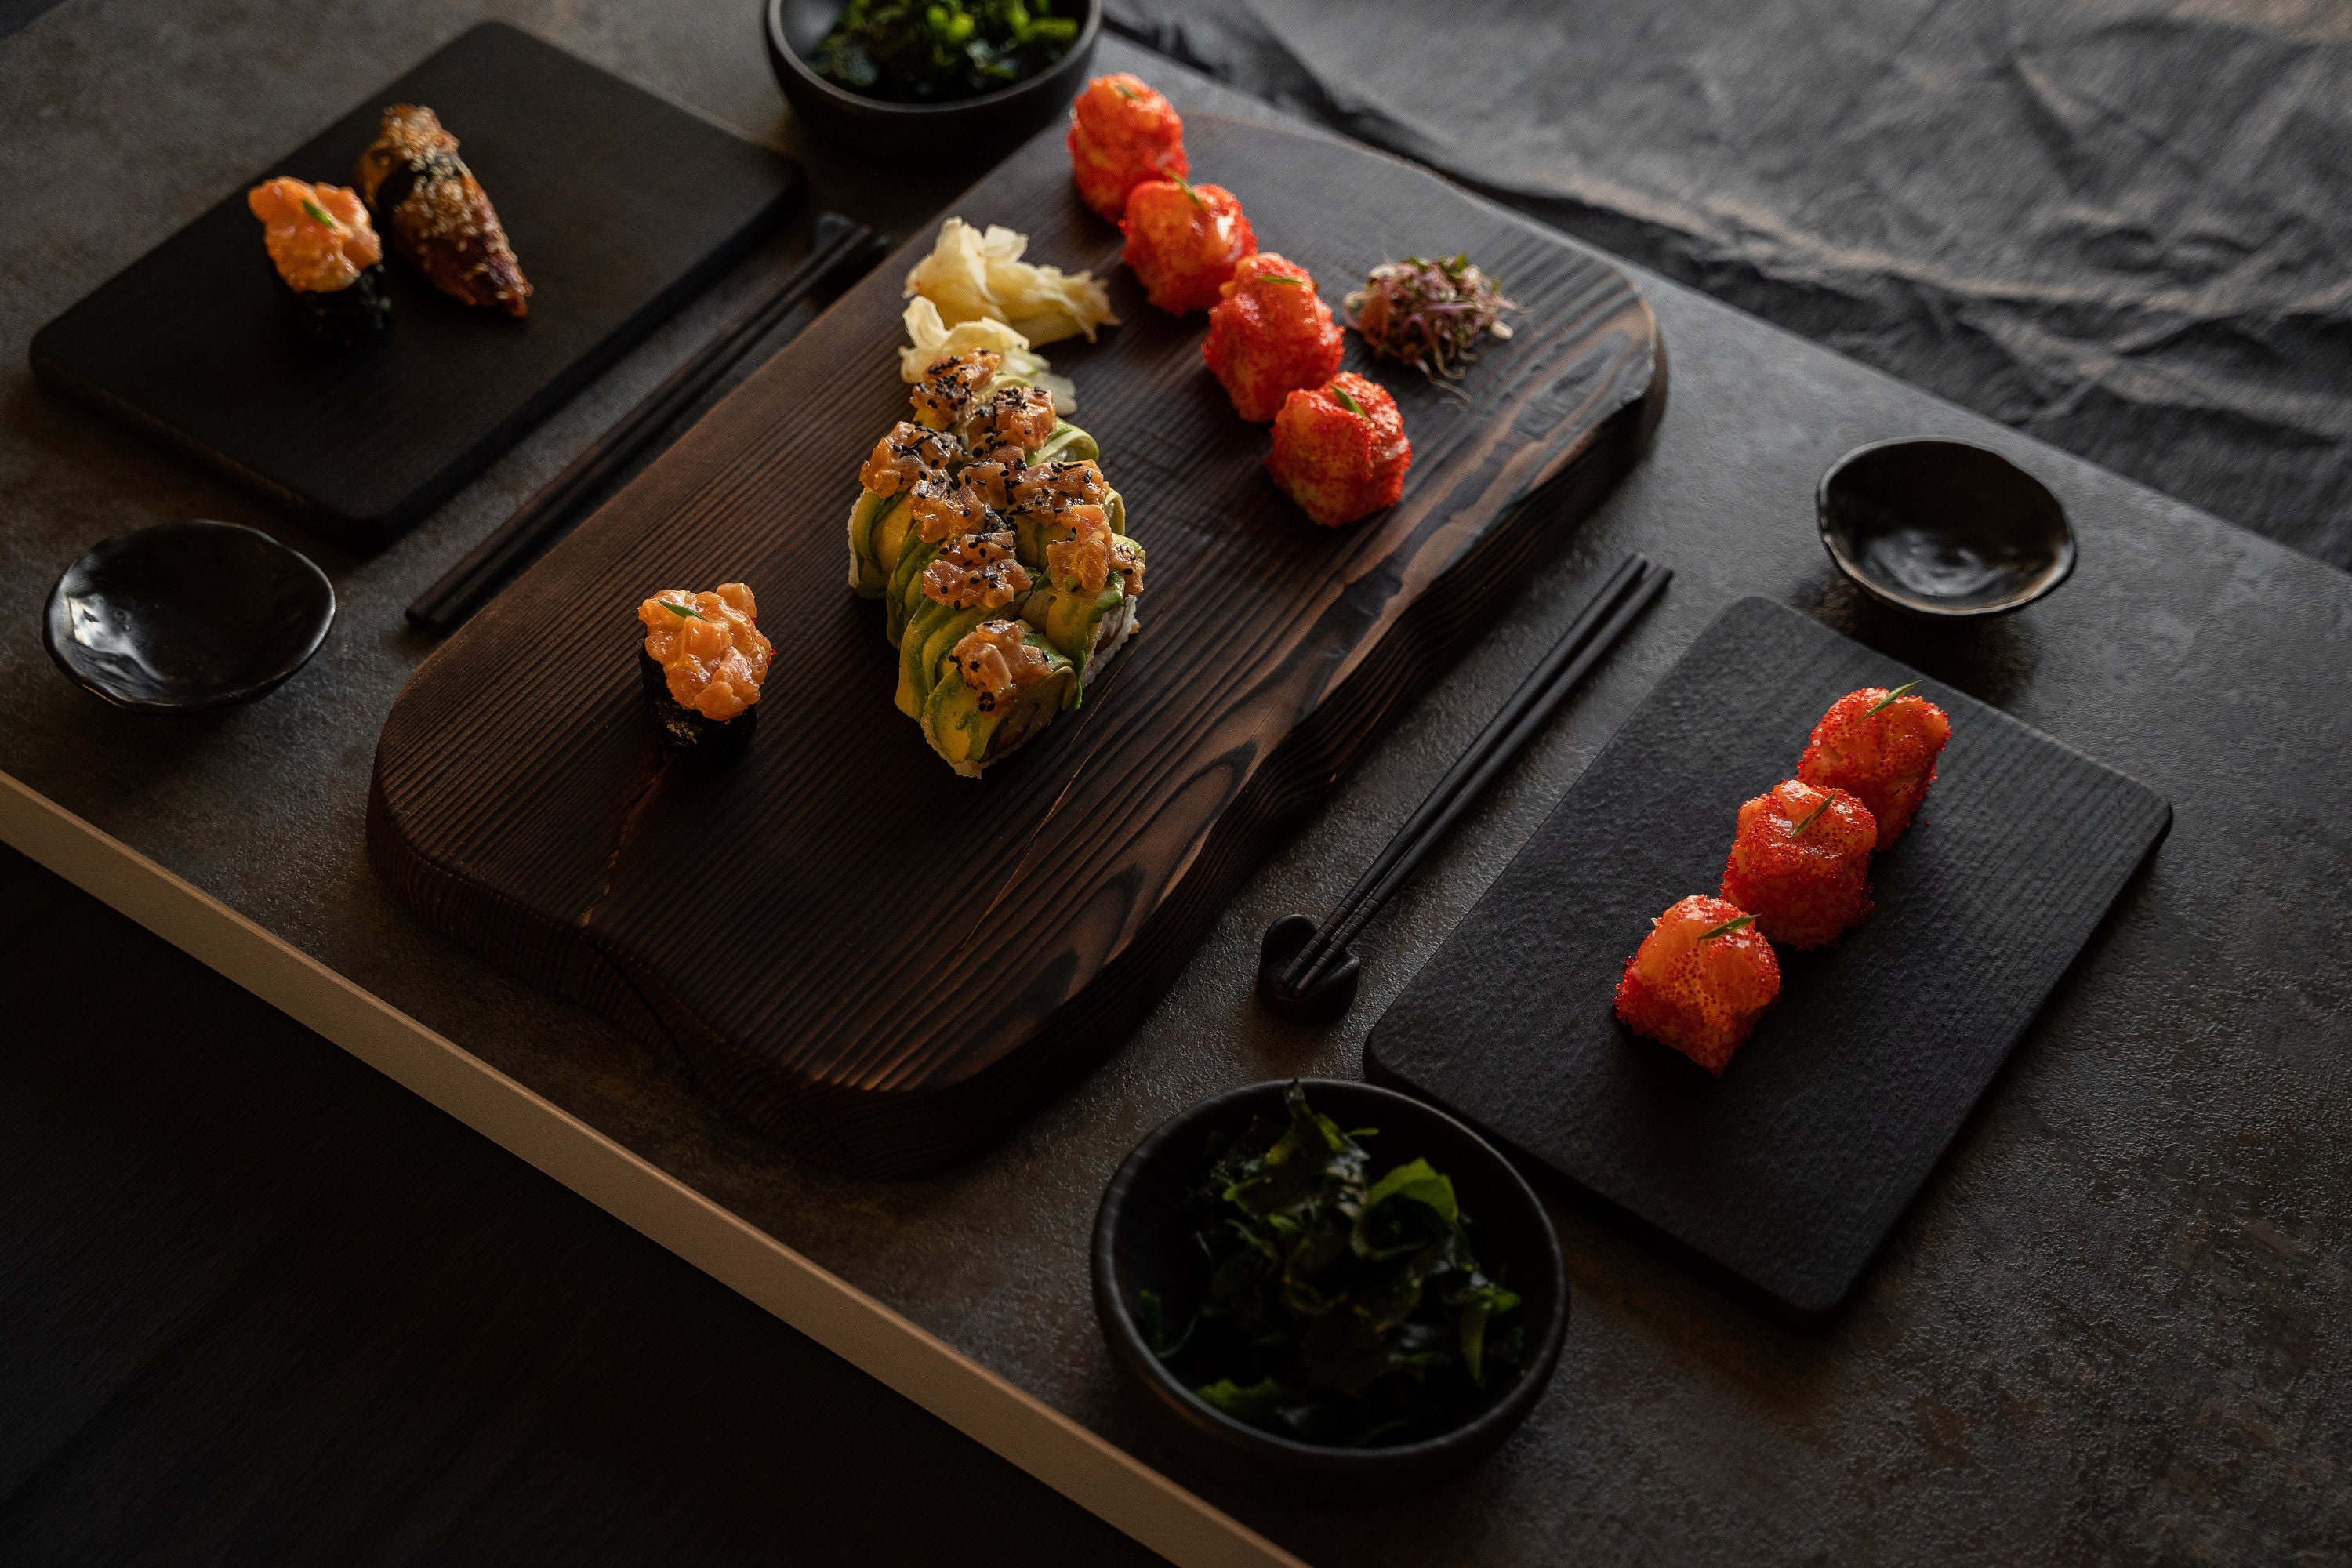 uniidea Ceramic Sushi Serving Tray Sets 2, 6 Pieces Japanese Style